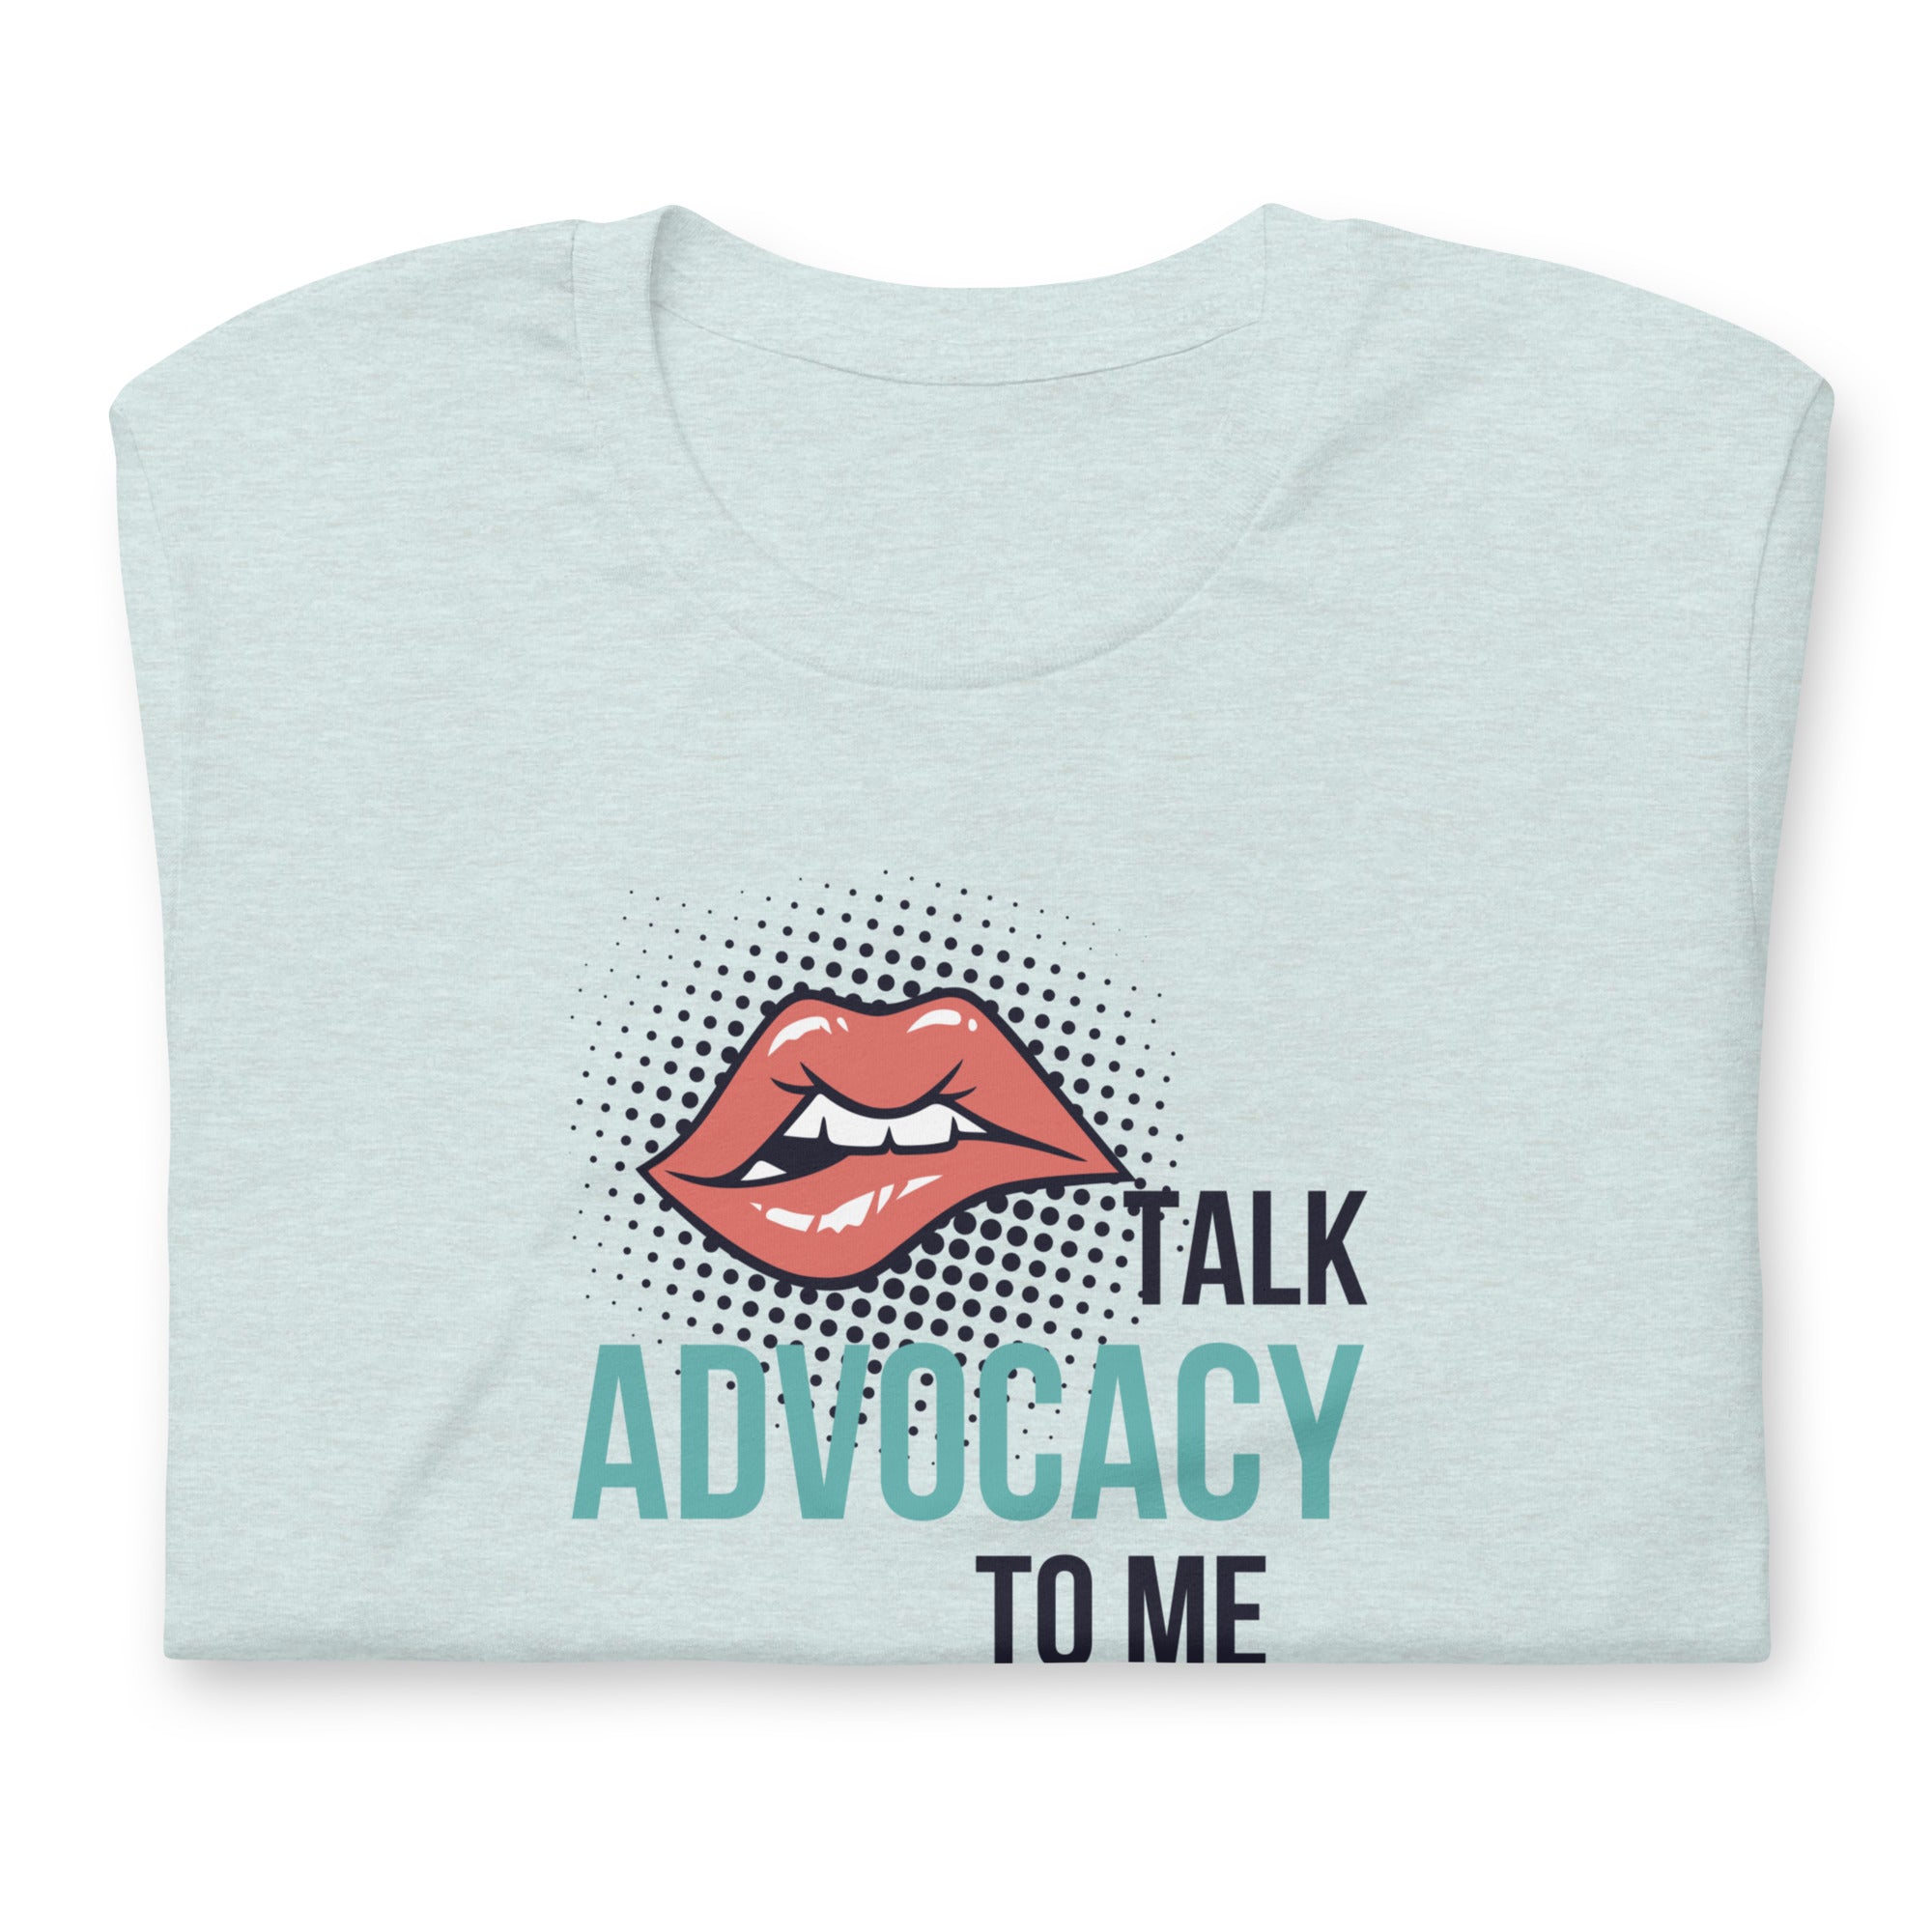 Talk Advocacy to Me Logo T-Shirt